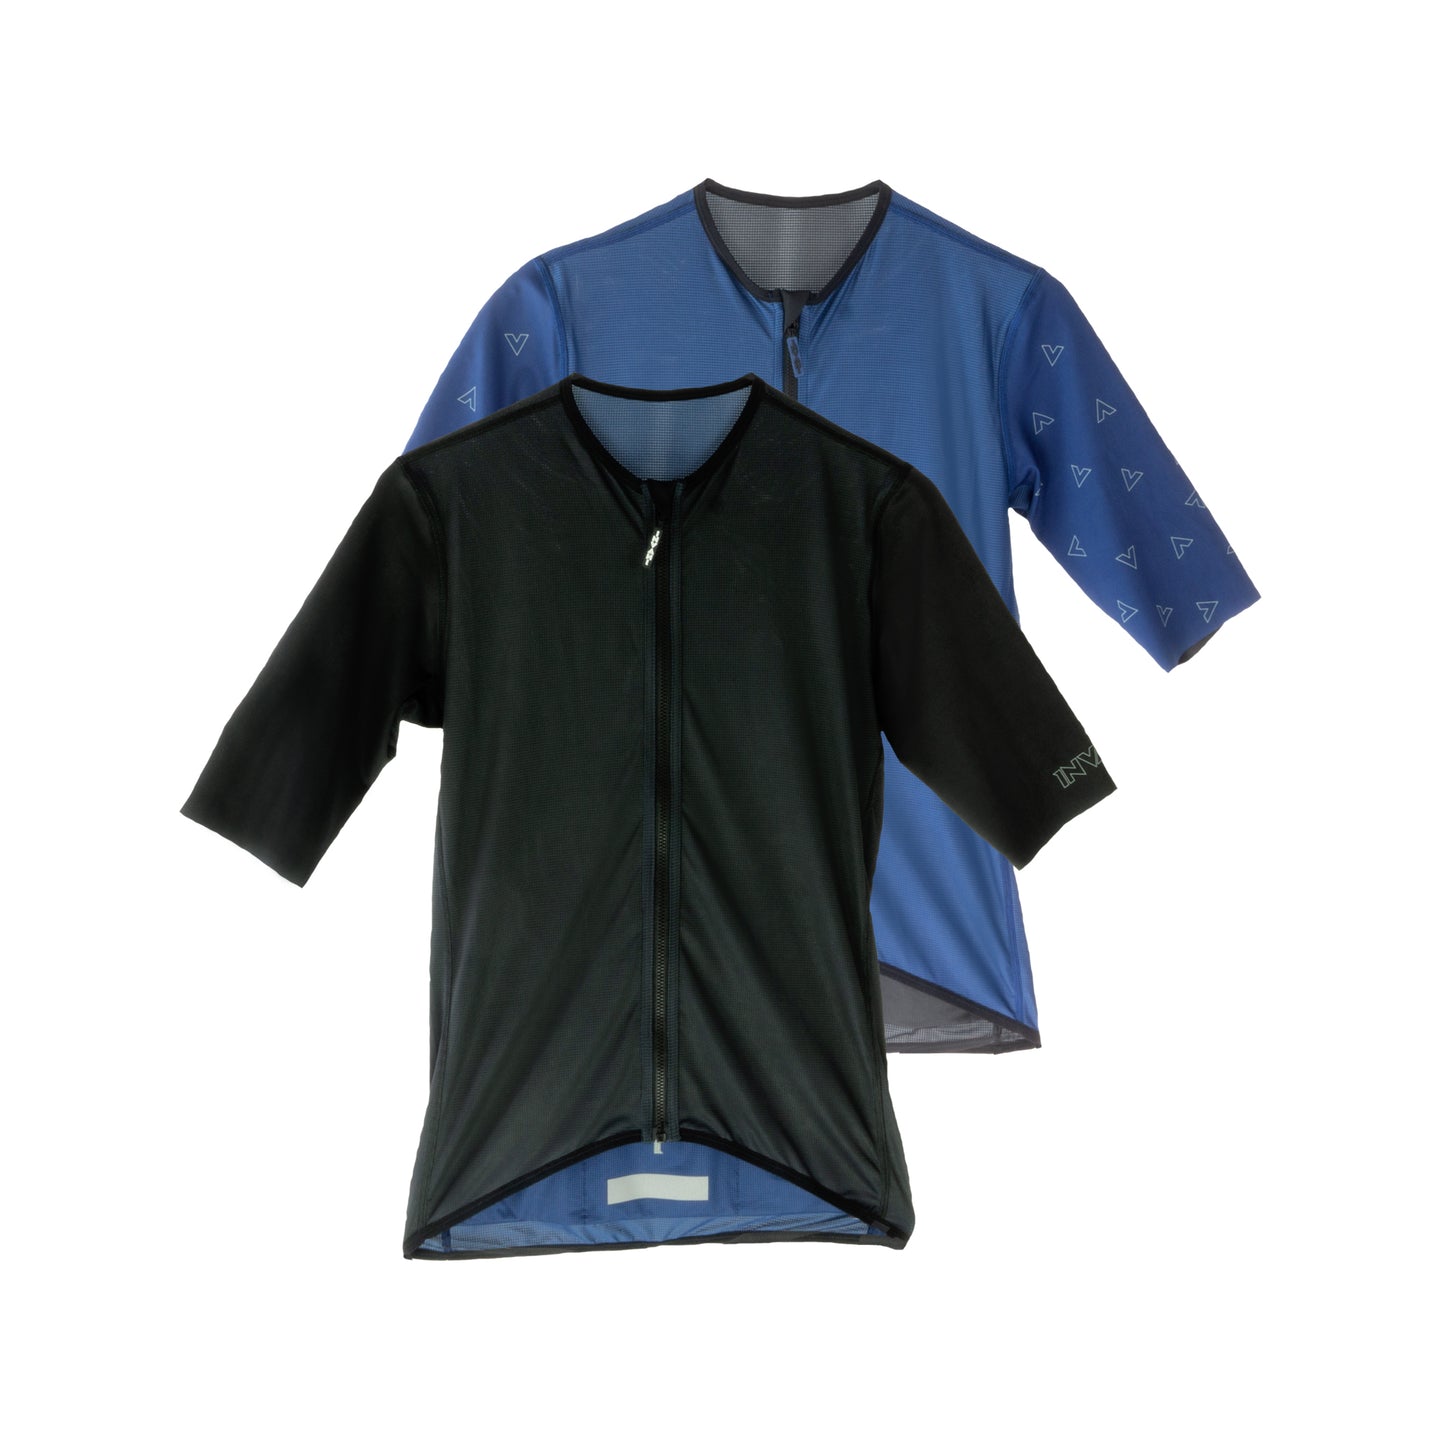 Slim Fit Reversible Summer Jersey: Black / Blue (Men's)